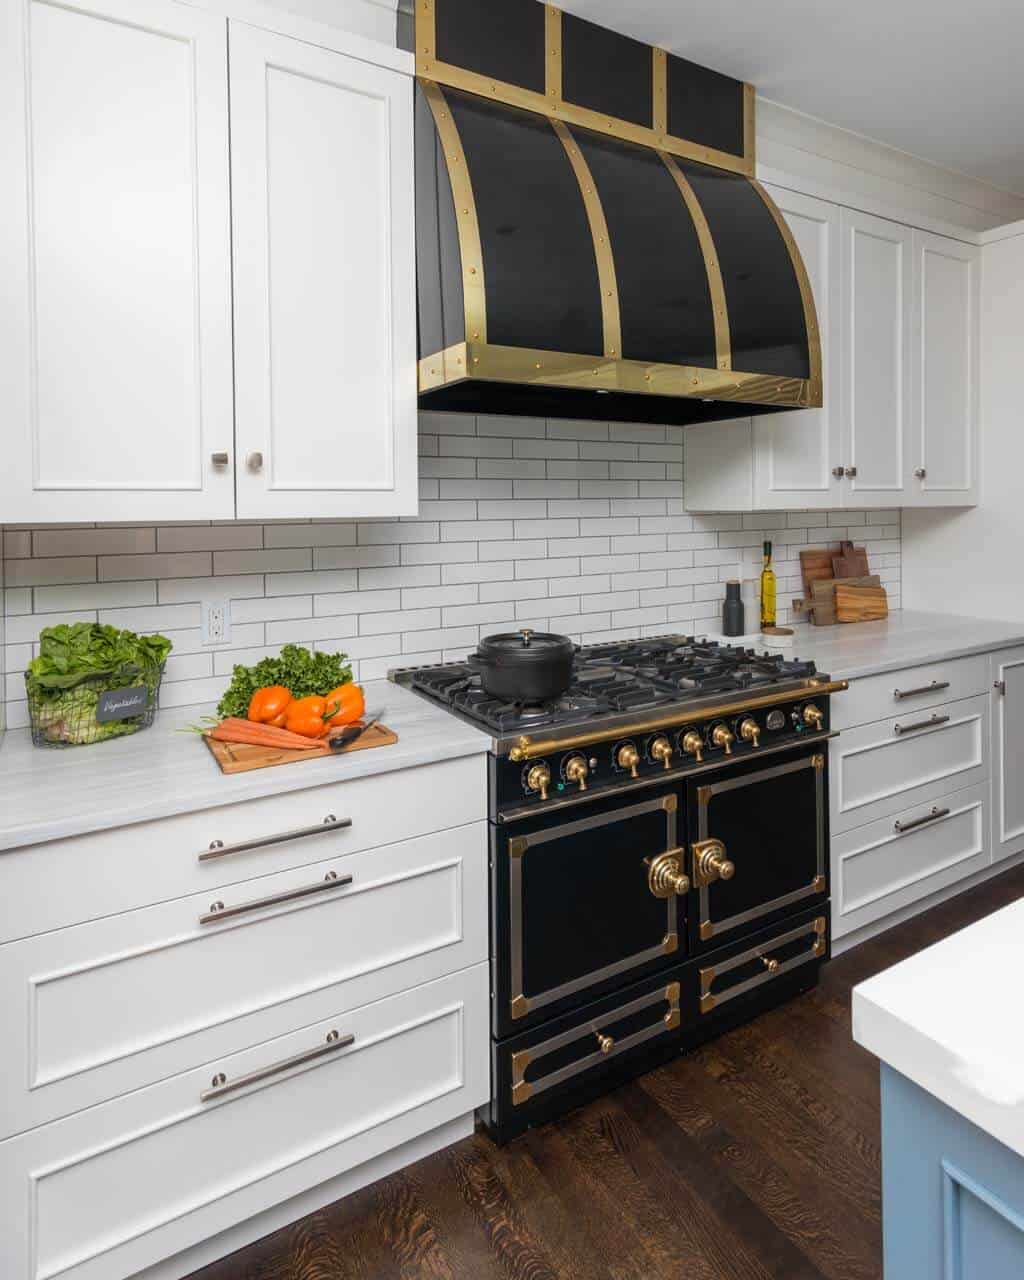 Classic Chappaqua kitchen features Bilotta custom cabinets, chrome and brass hardware and black and brass La Cornue range and hood.